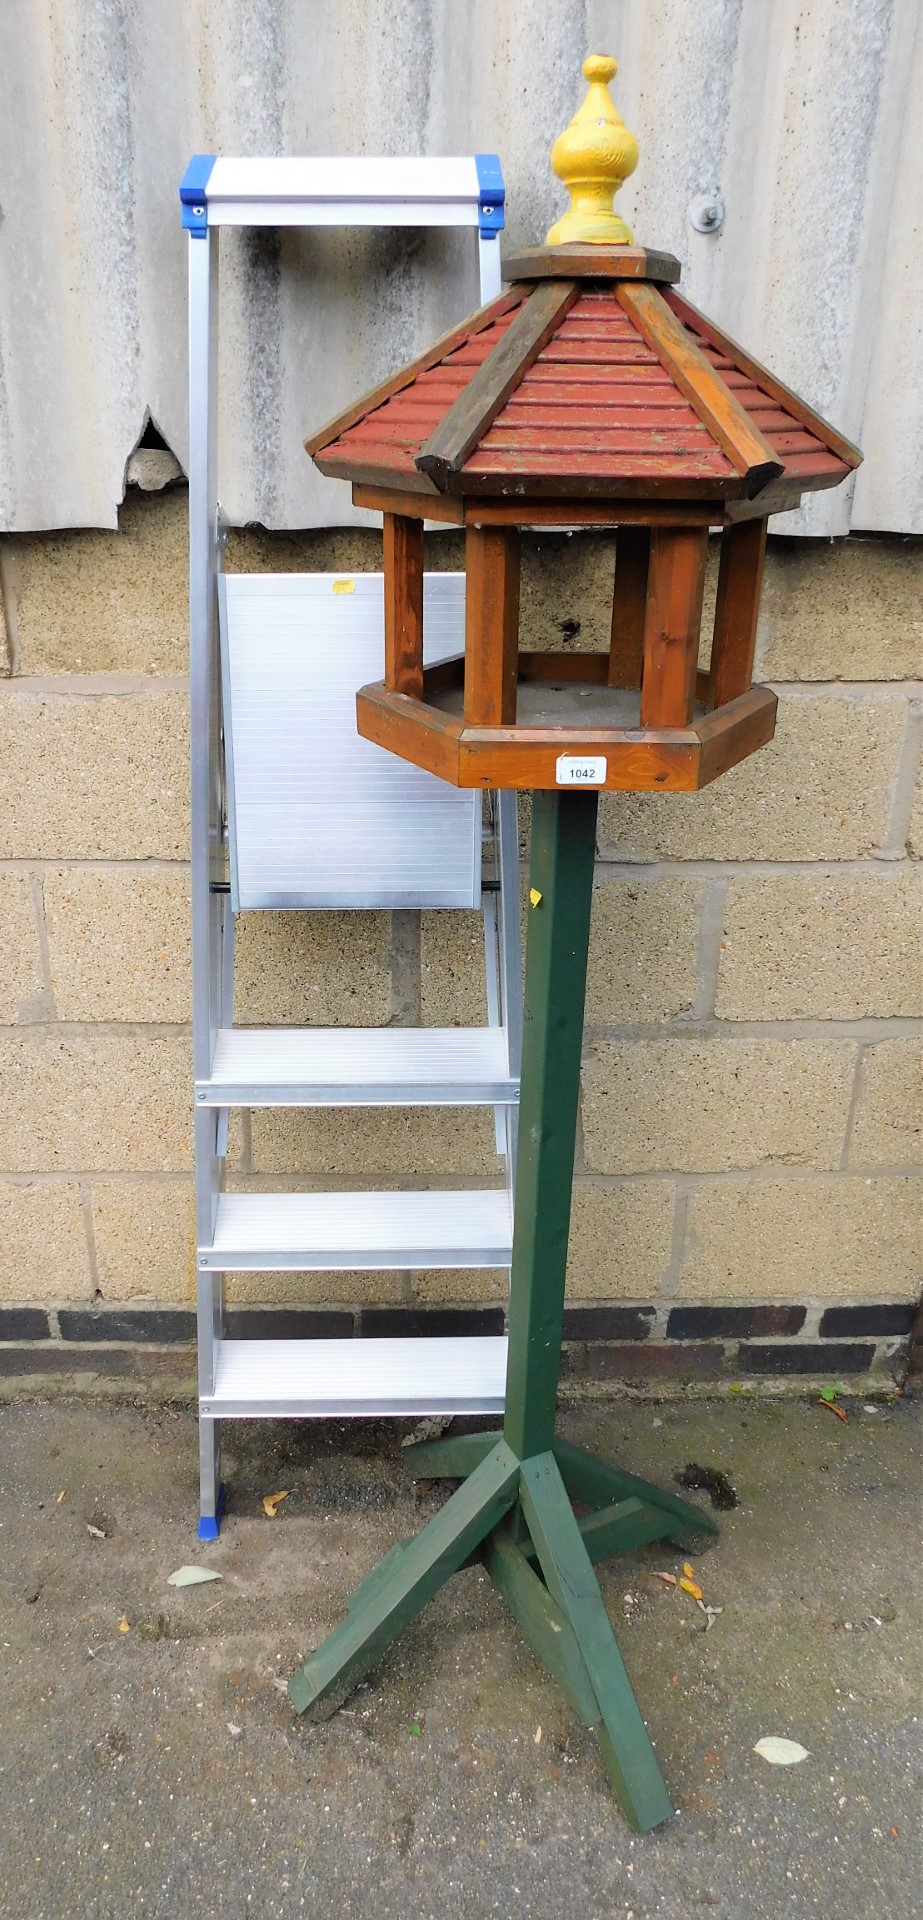 An aluminium step ladder and a bird table.